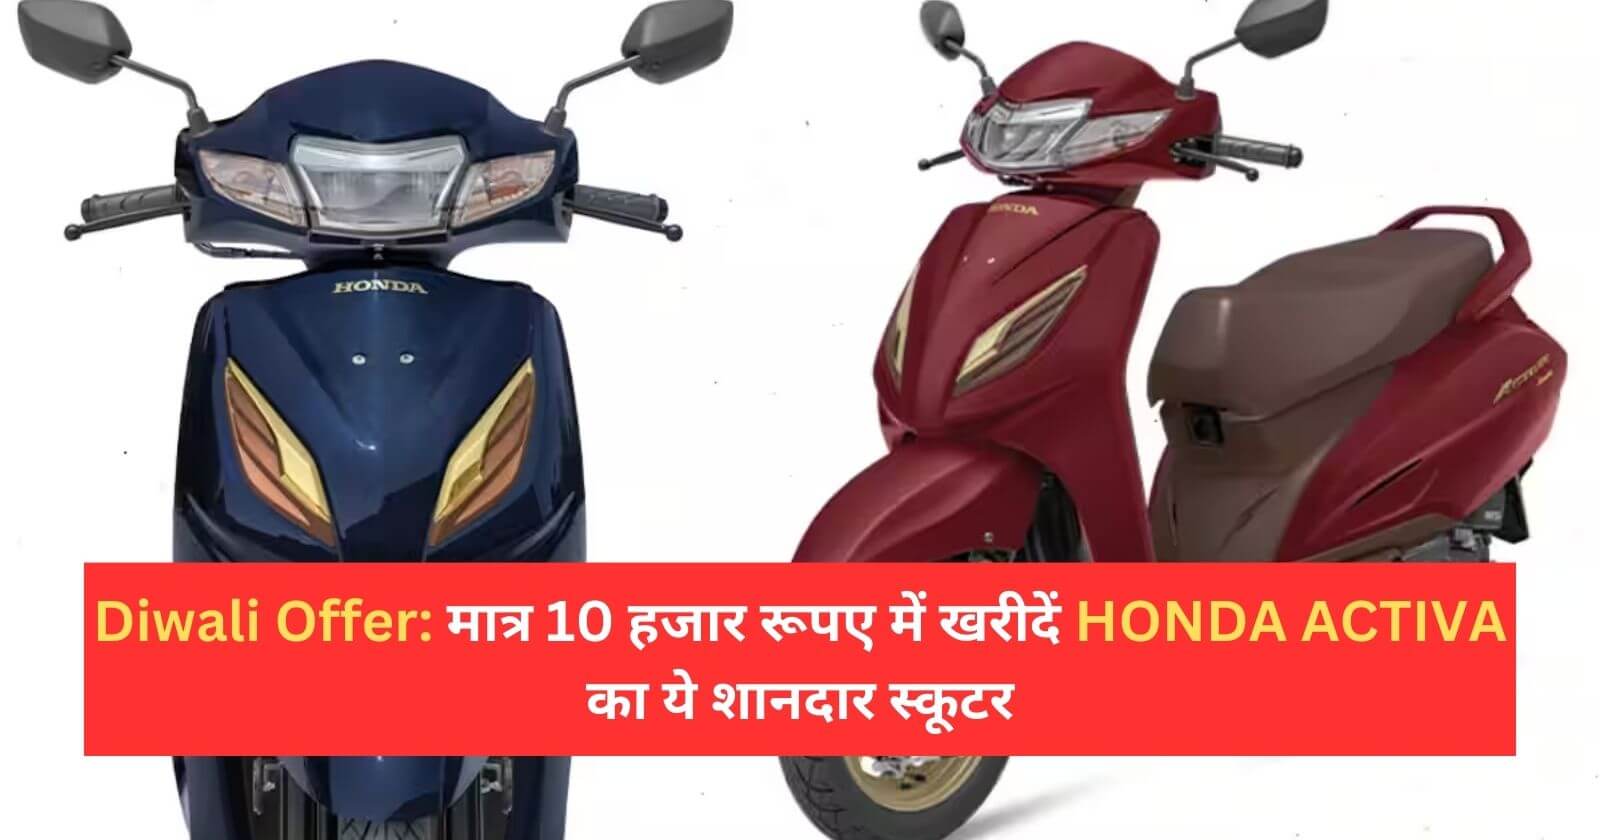 Honda Activa Diwali Offer